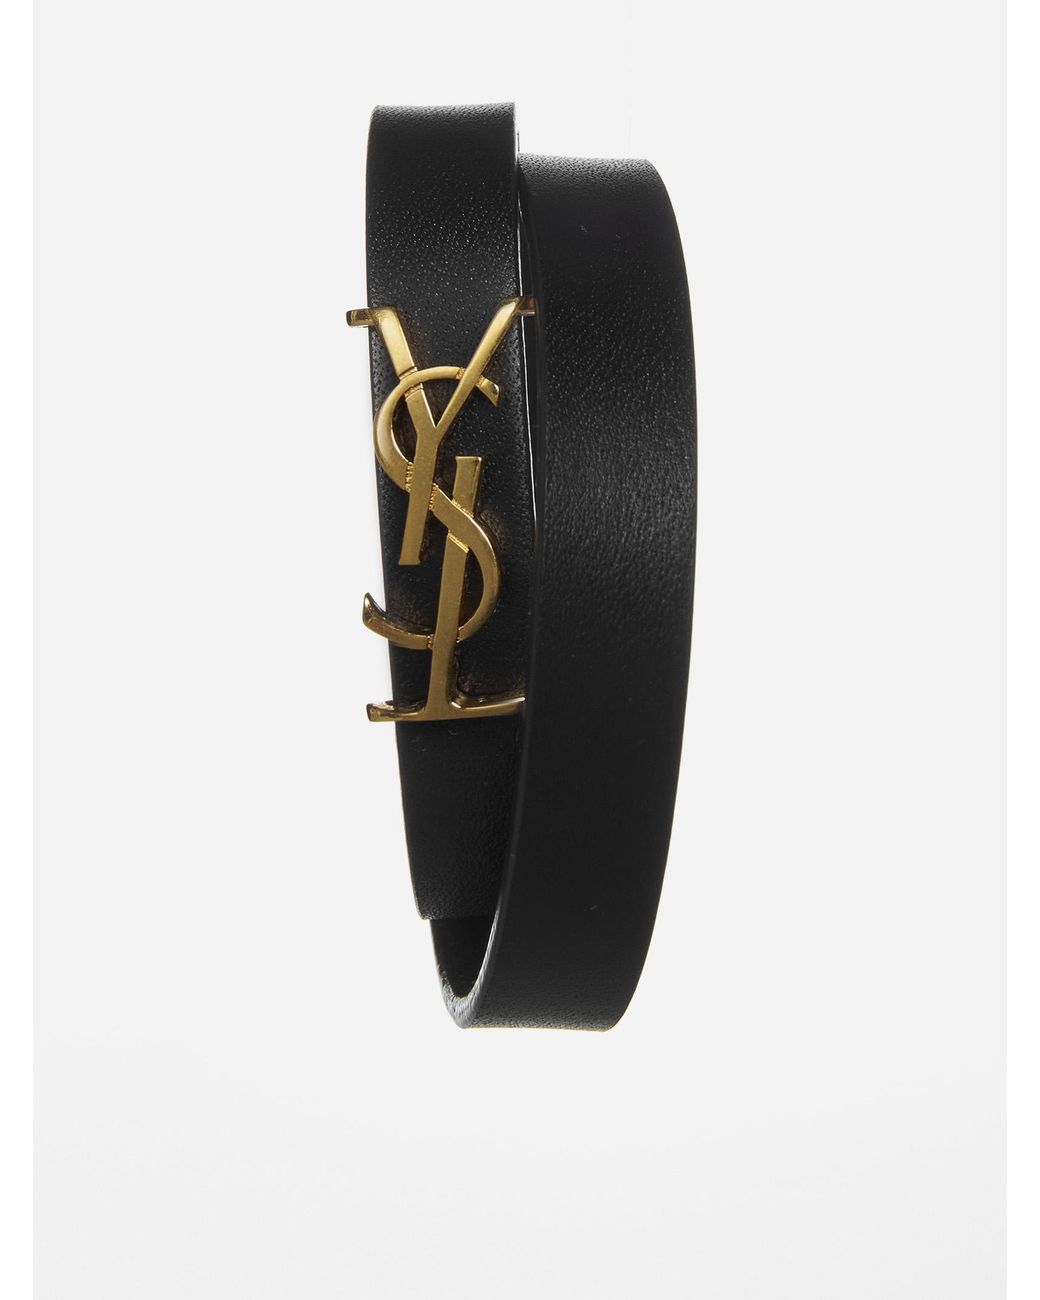 Saint Laurent Opyum Ysl Logo Leather Bracelet in Black | Lyst